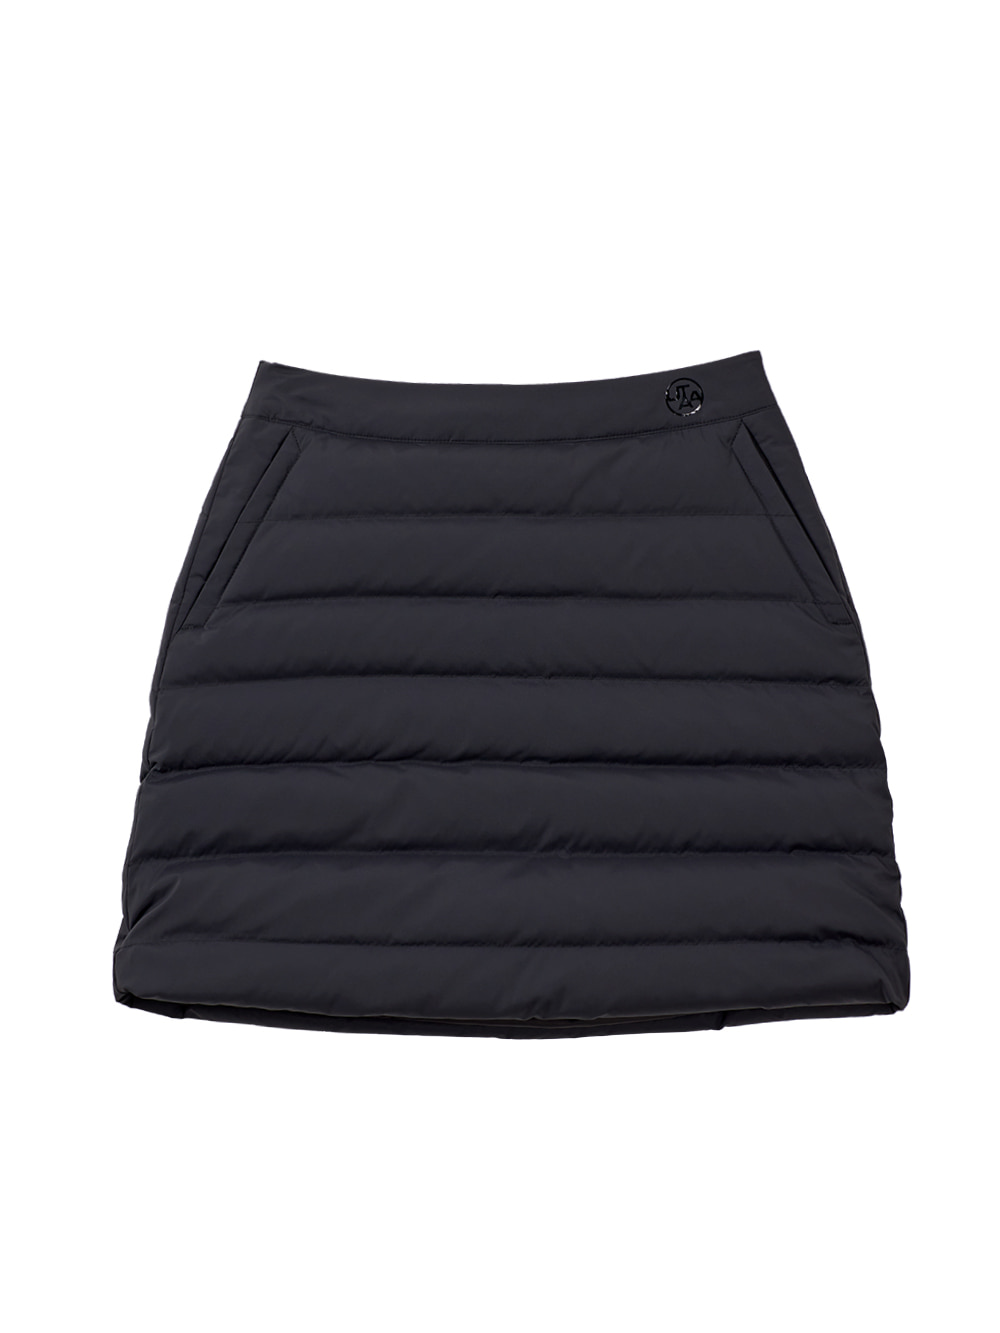 UTAA Basic Block Down Skirt : Black (UA4SKF860BK)